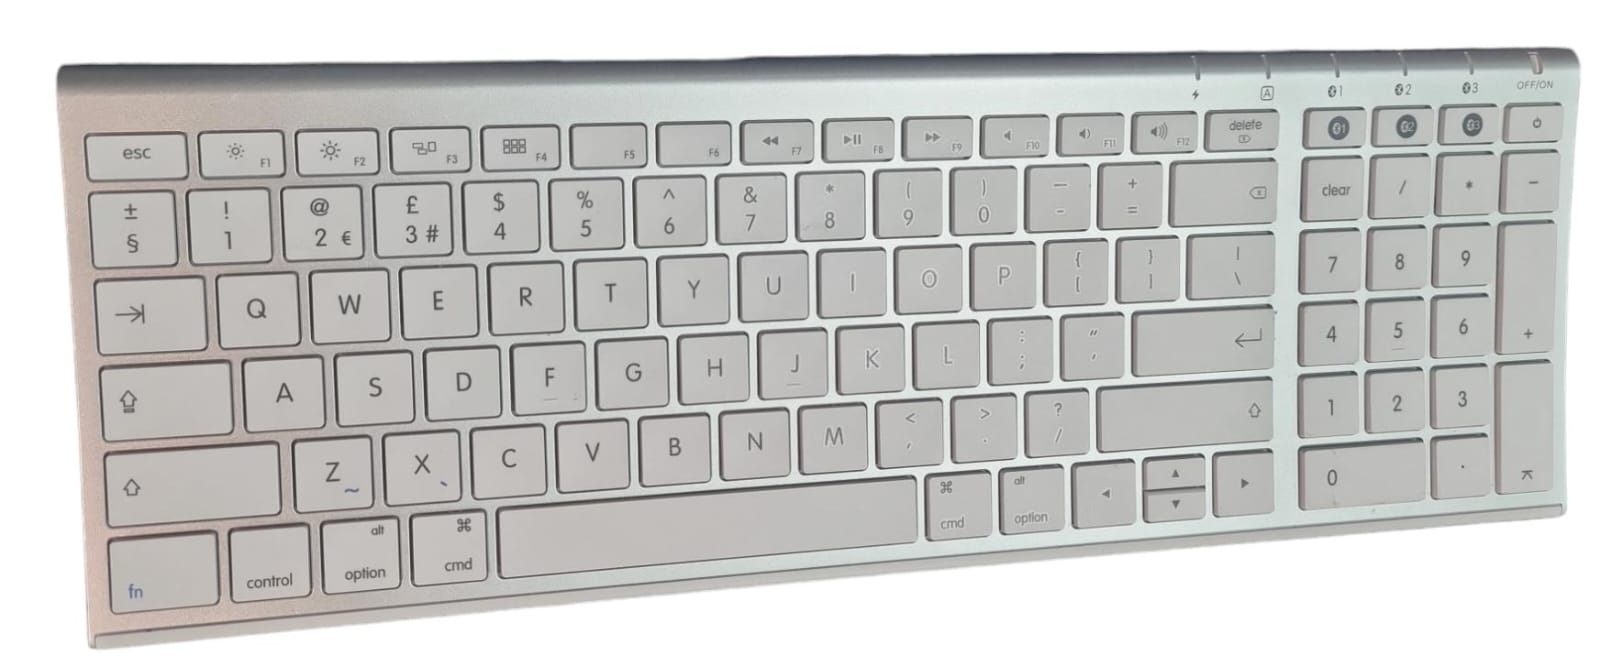 Seenda Wireless Keyboard - No Box